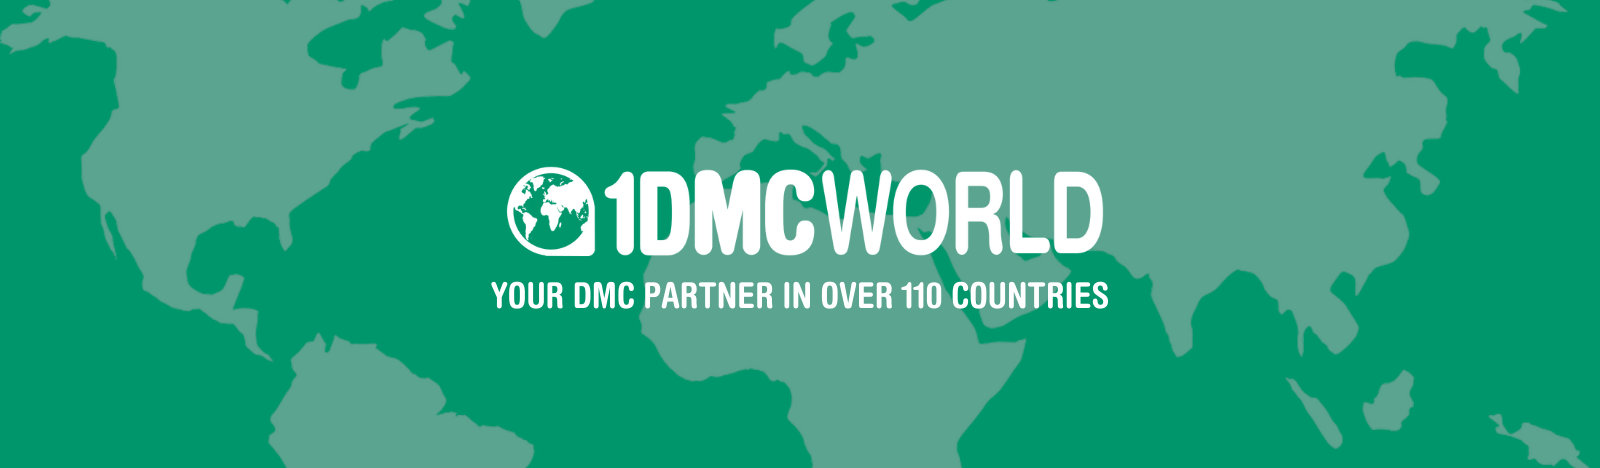 1 DMC World